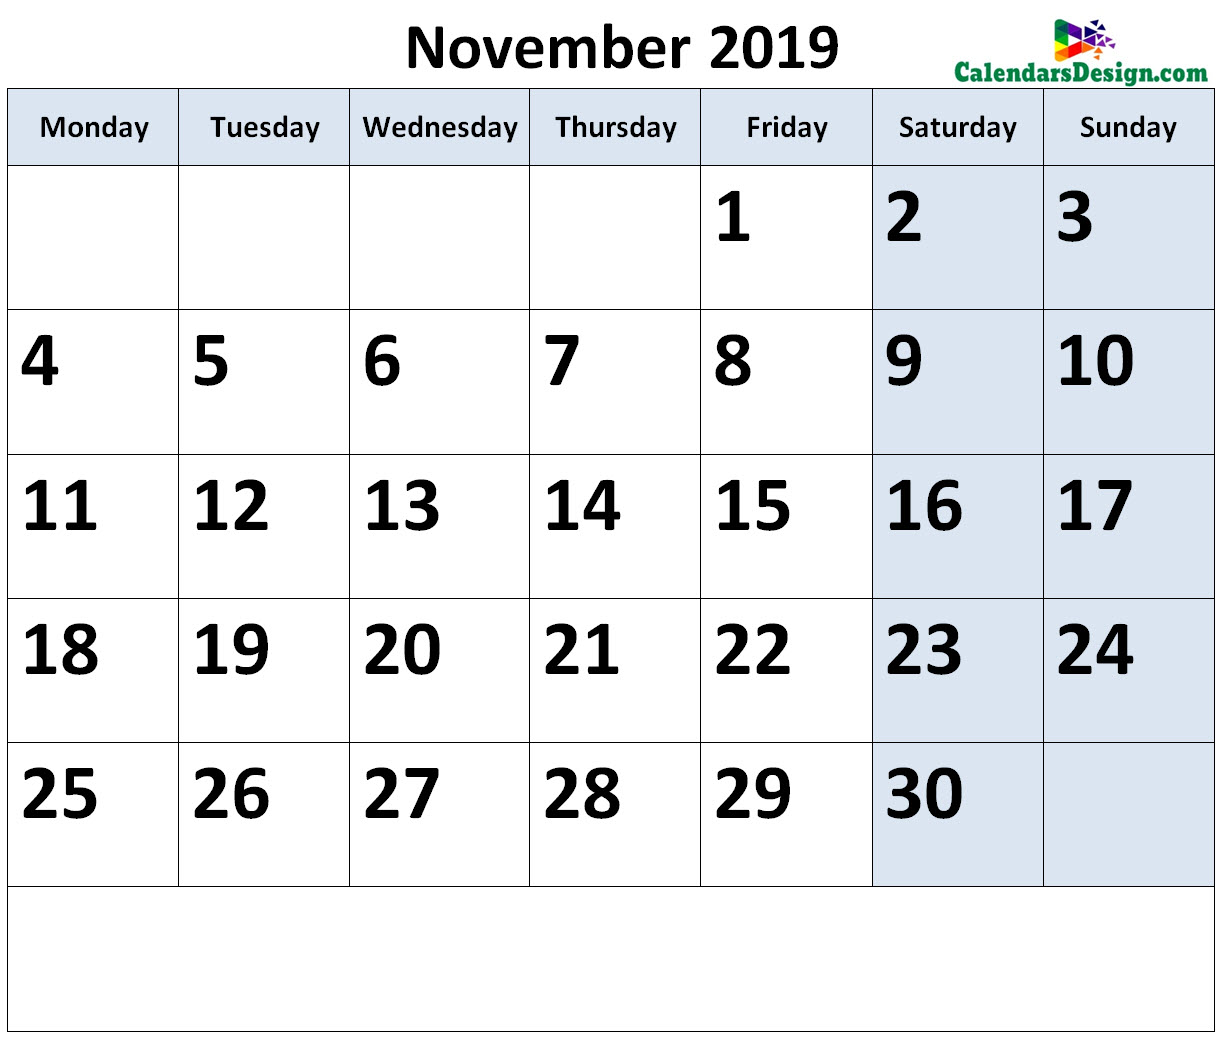 November 2019 Calendar Page